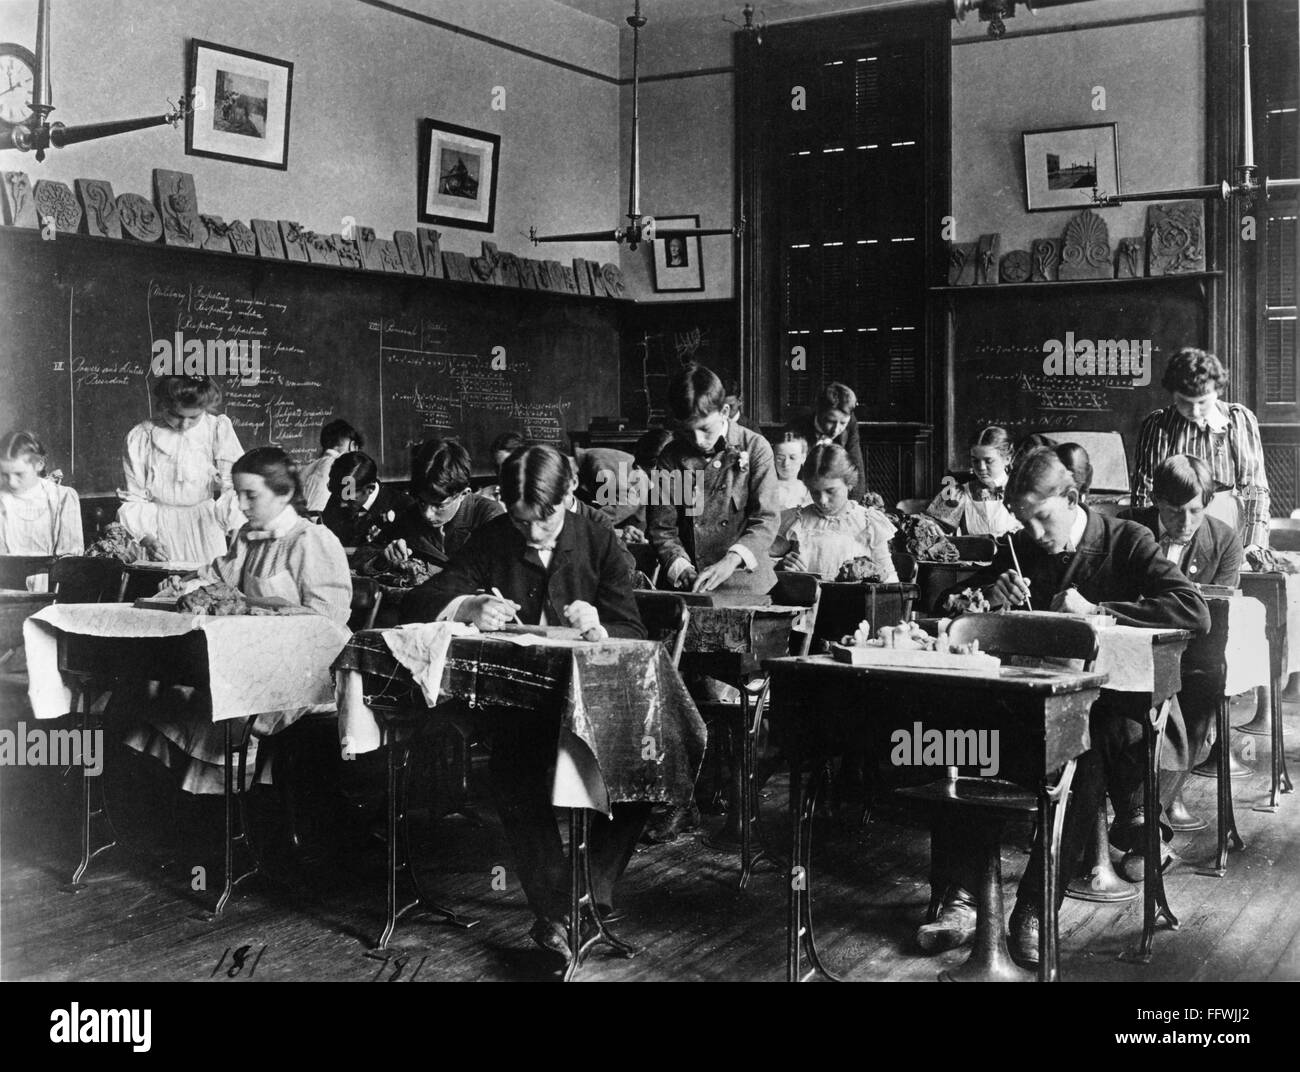 CERAMICS CLASS, 1899. /nA ceramics class at Western High School in Washington, D.C. Photograph by Frances Benjamin Johnston, 1899. Stock Photo